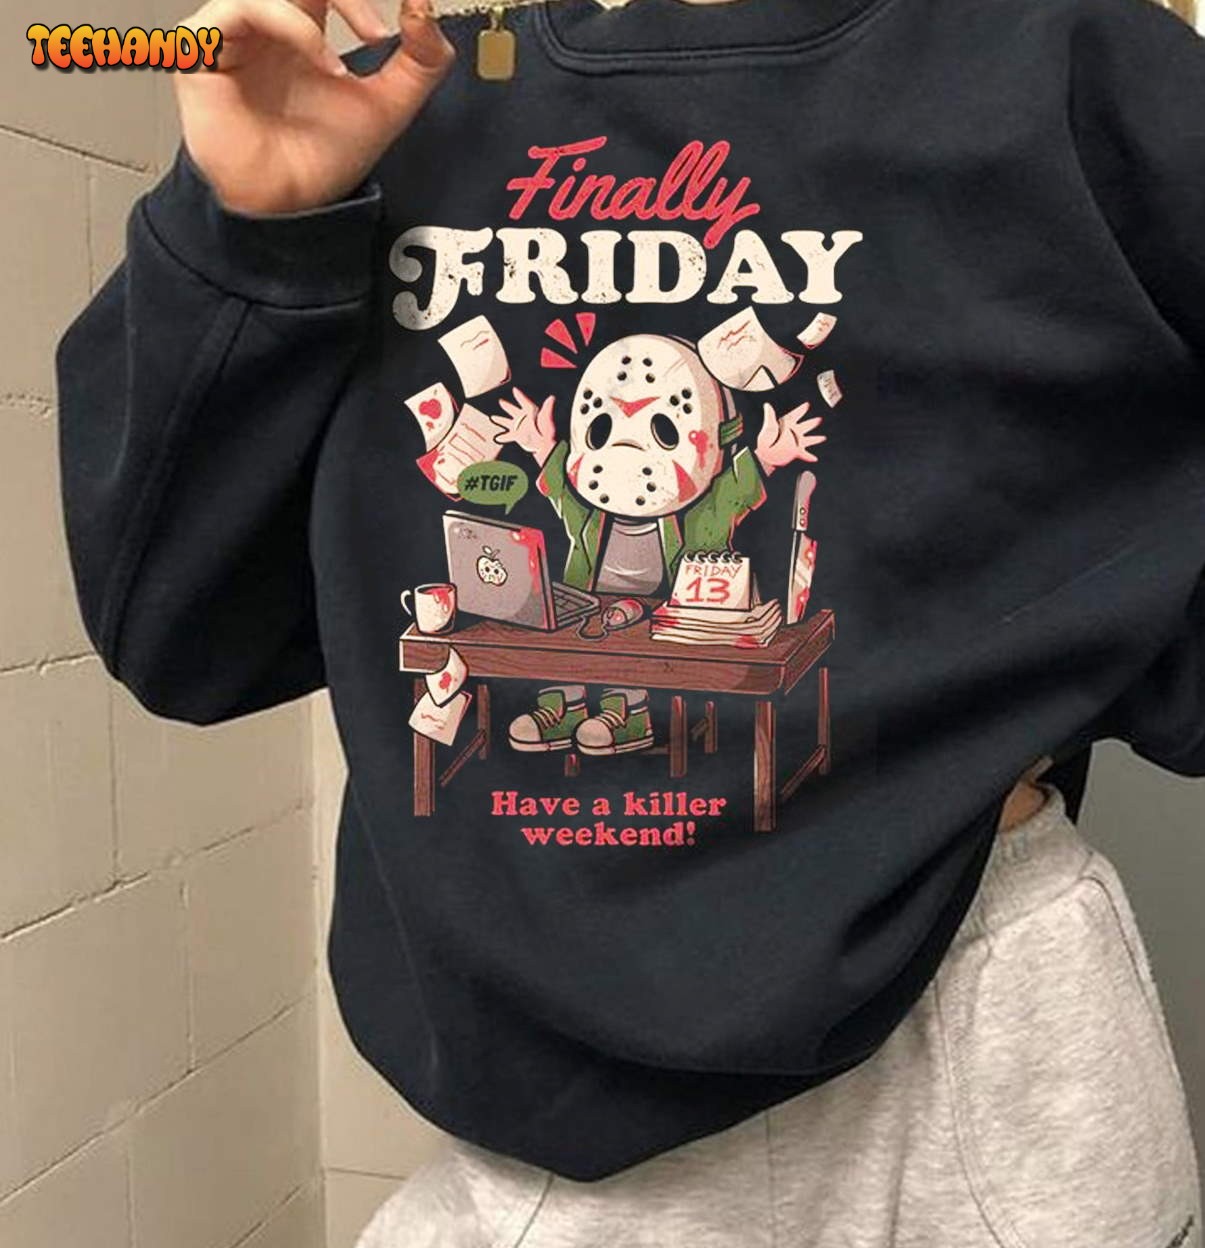 Jason Vorhees Shirt, Friday 13th Shirt, Horror Movie Character Shirt